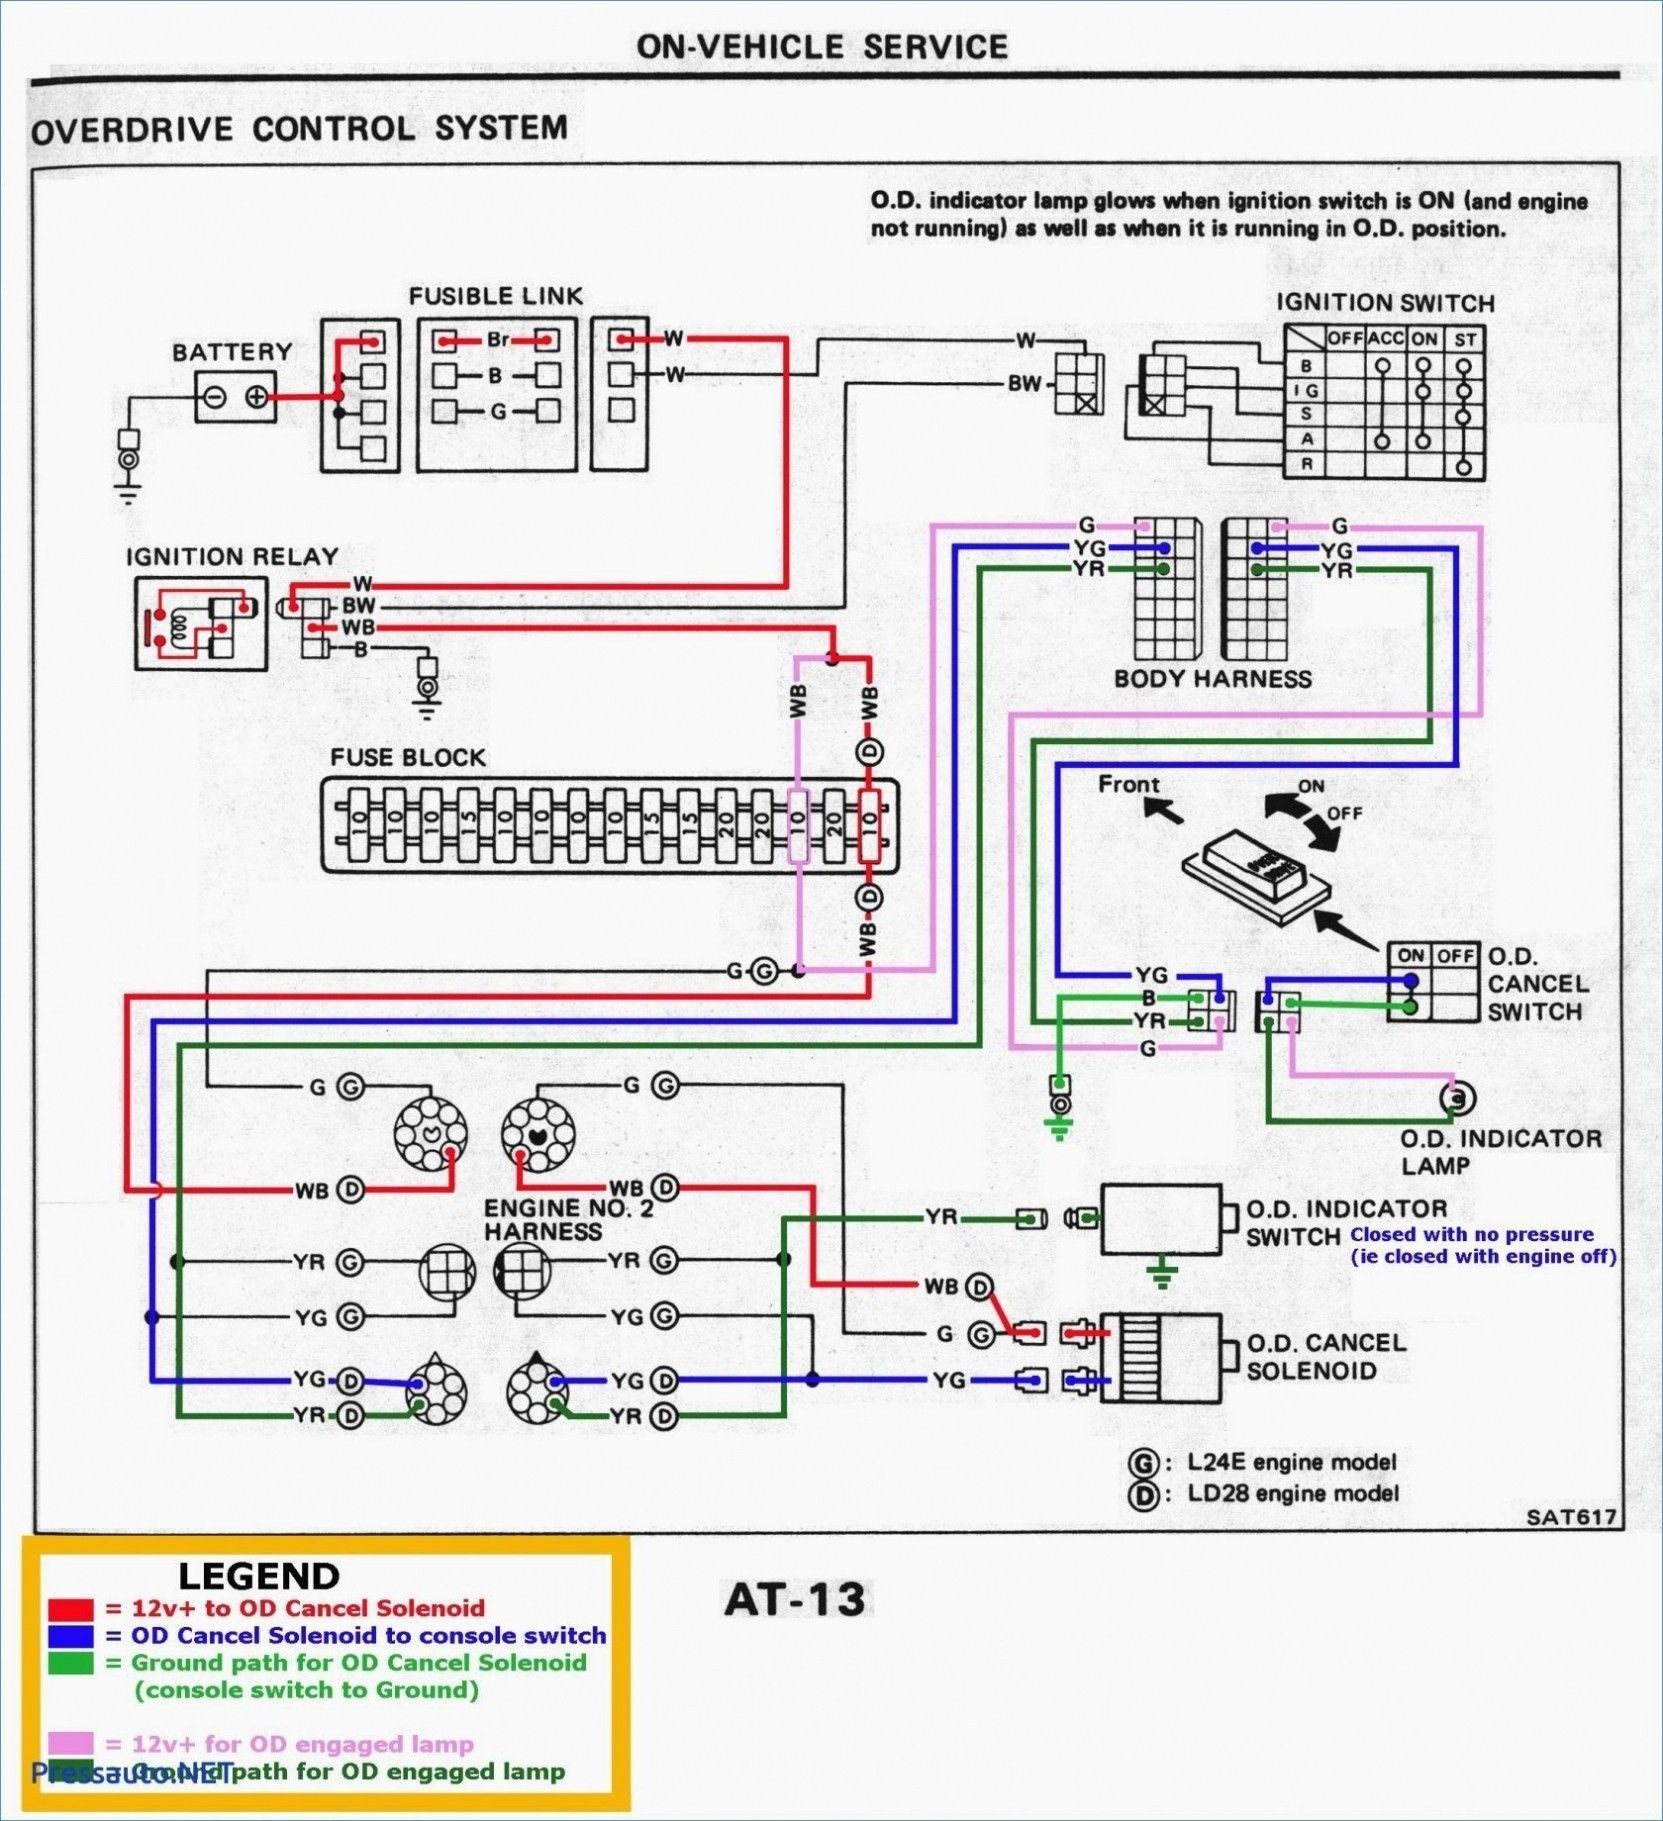 1994 Ezgo Gas Engine Wiring Diagram New Electrical Wiring Diagram toyota Avanza Of 1994 Ezgo Gas Engine Wiring Diagram